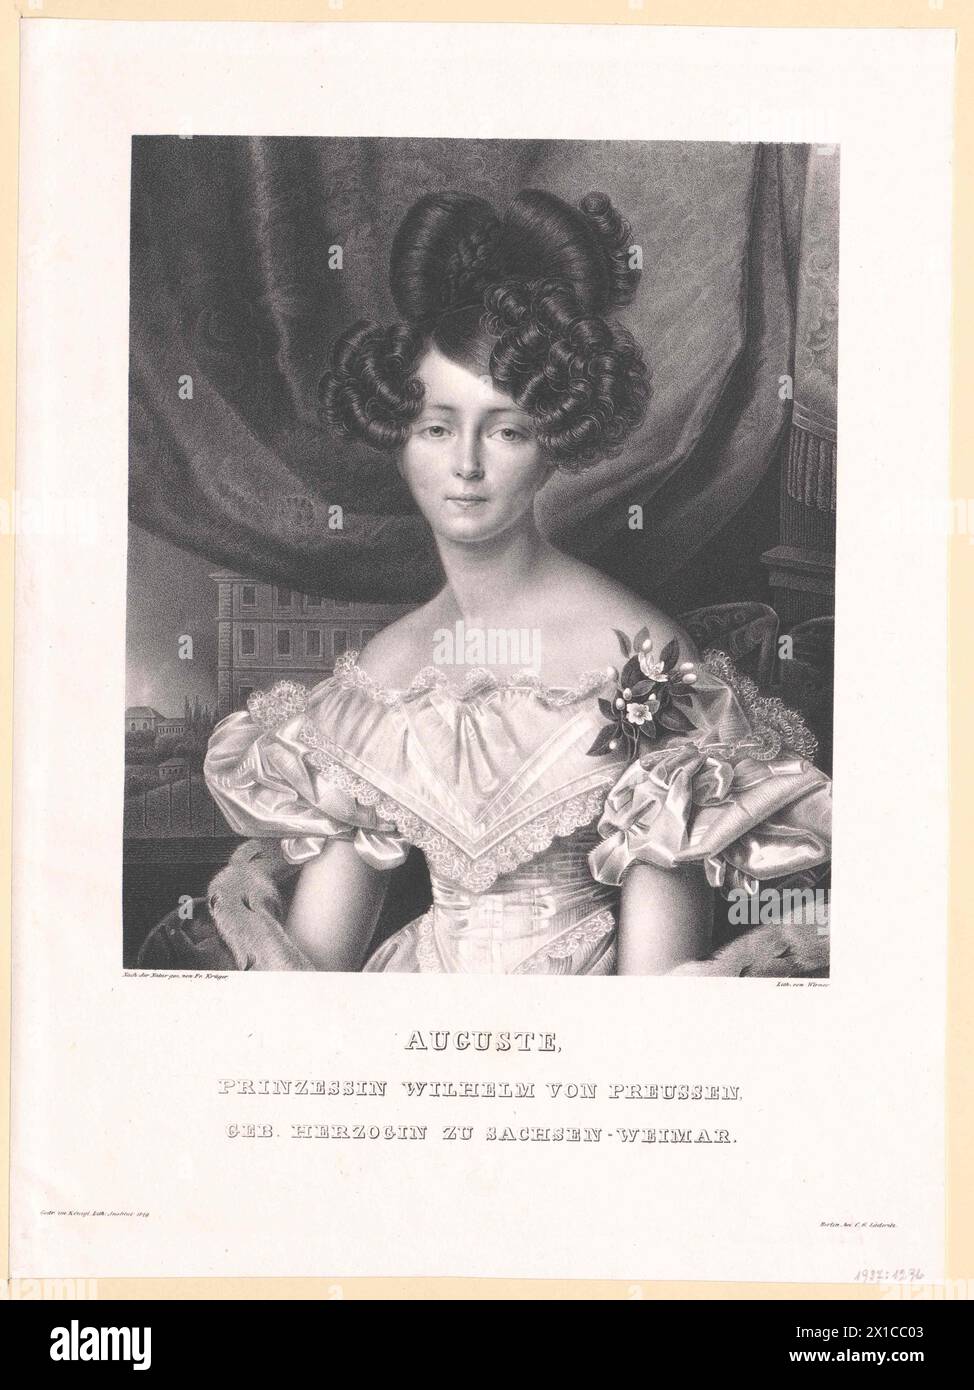 Augusta, principessa di Sassonia-Weimar Eisenach, - 19830422 PD80839 - Rechteinfo: Rights Managed (RM) Foto Stock